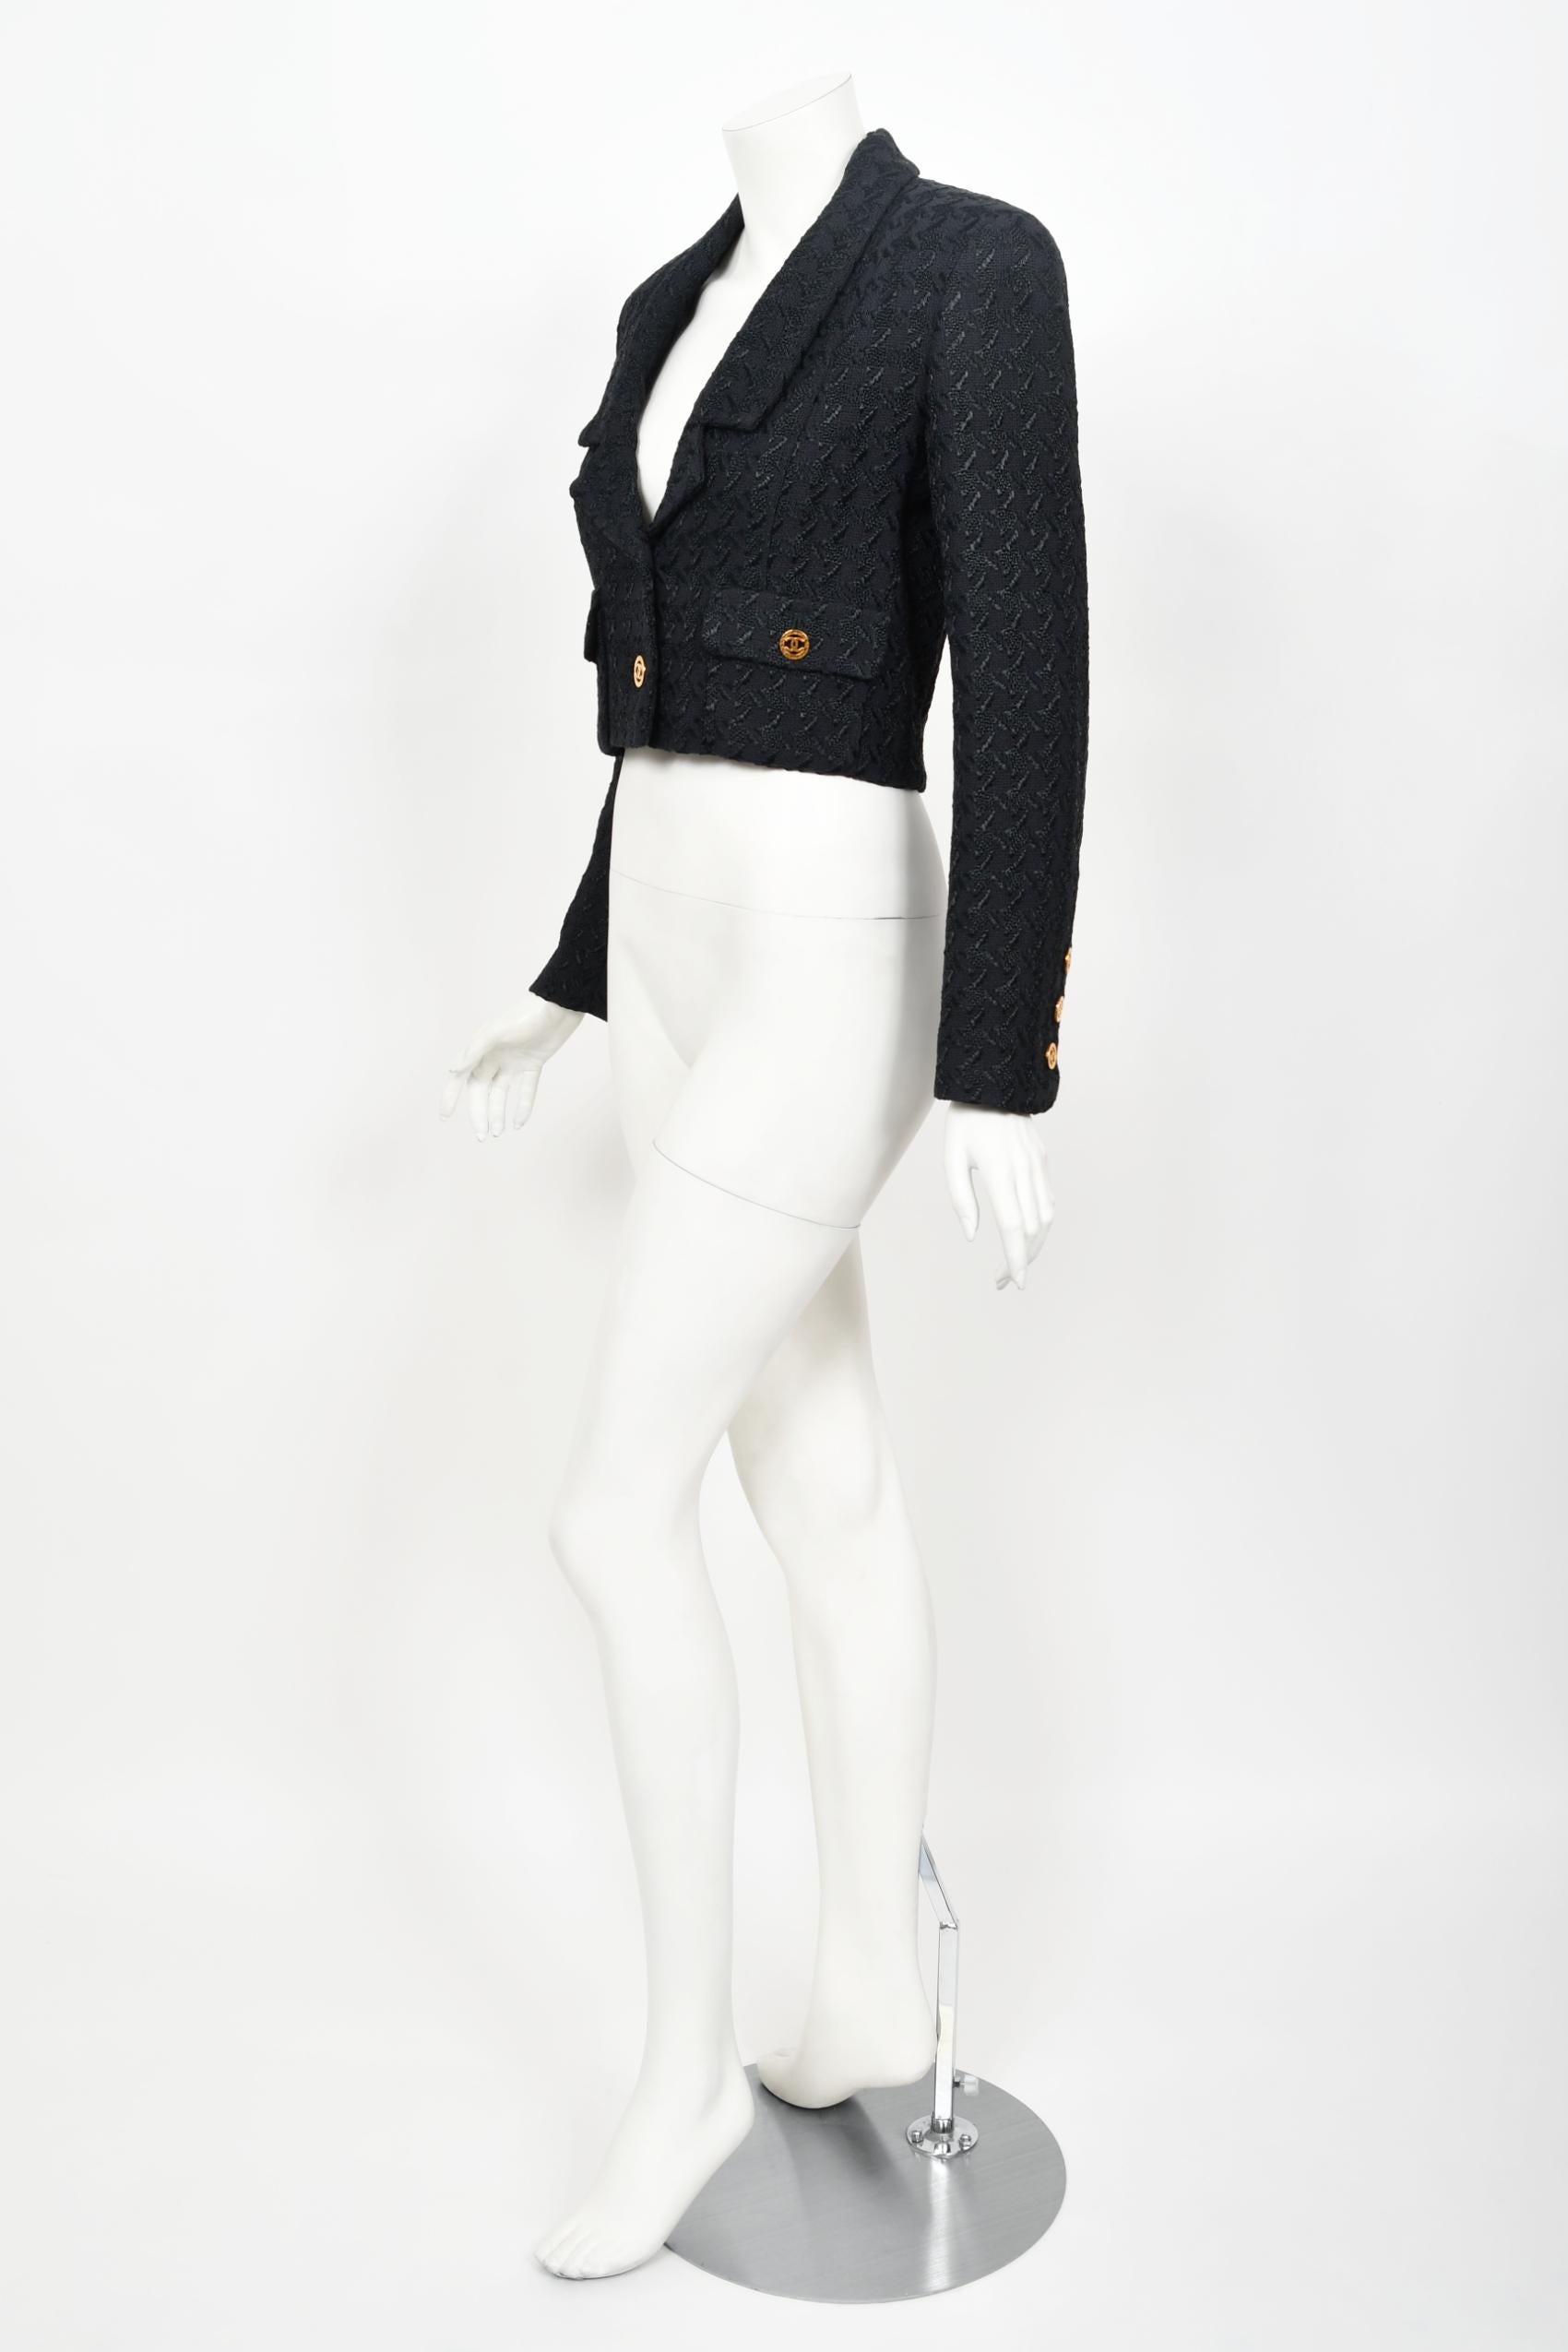 Women's Vintage 1993 Chanel by Karl Lagerfeld Runway Midnight Blue Wool Cropped Jacket 